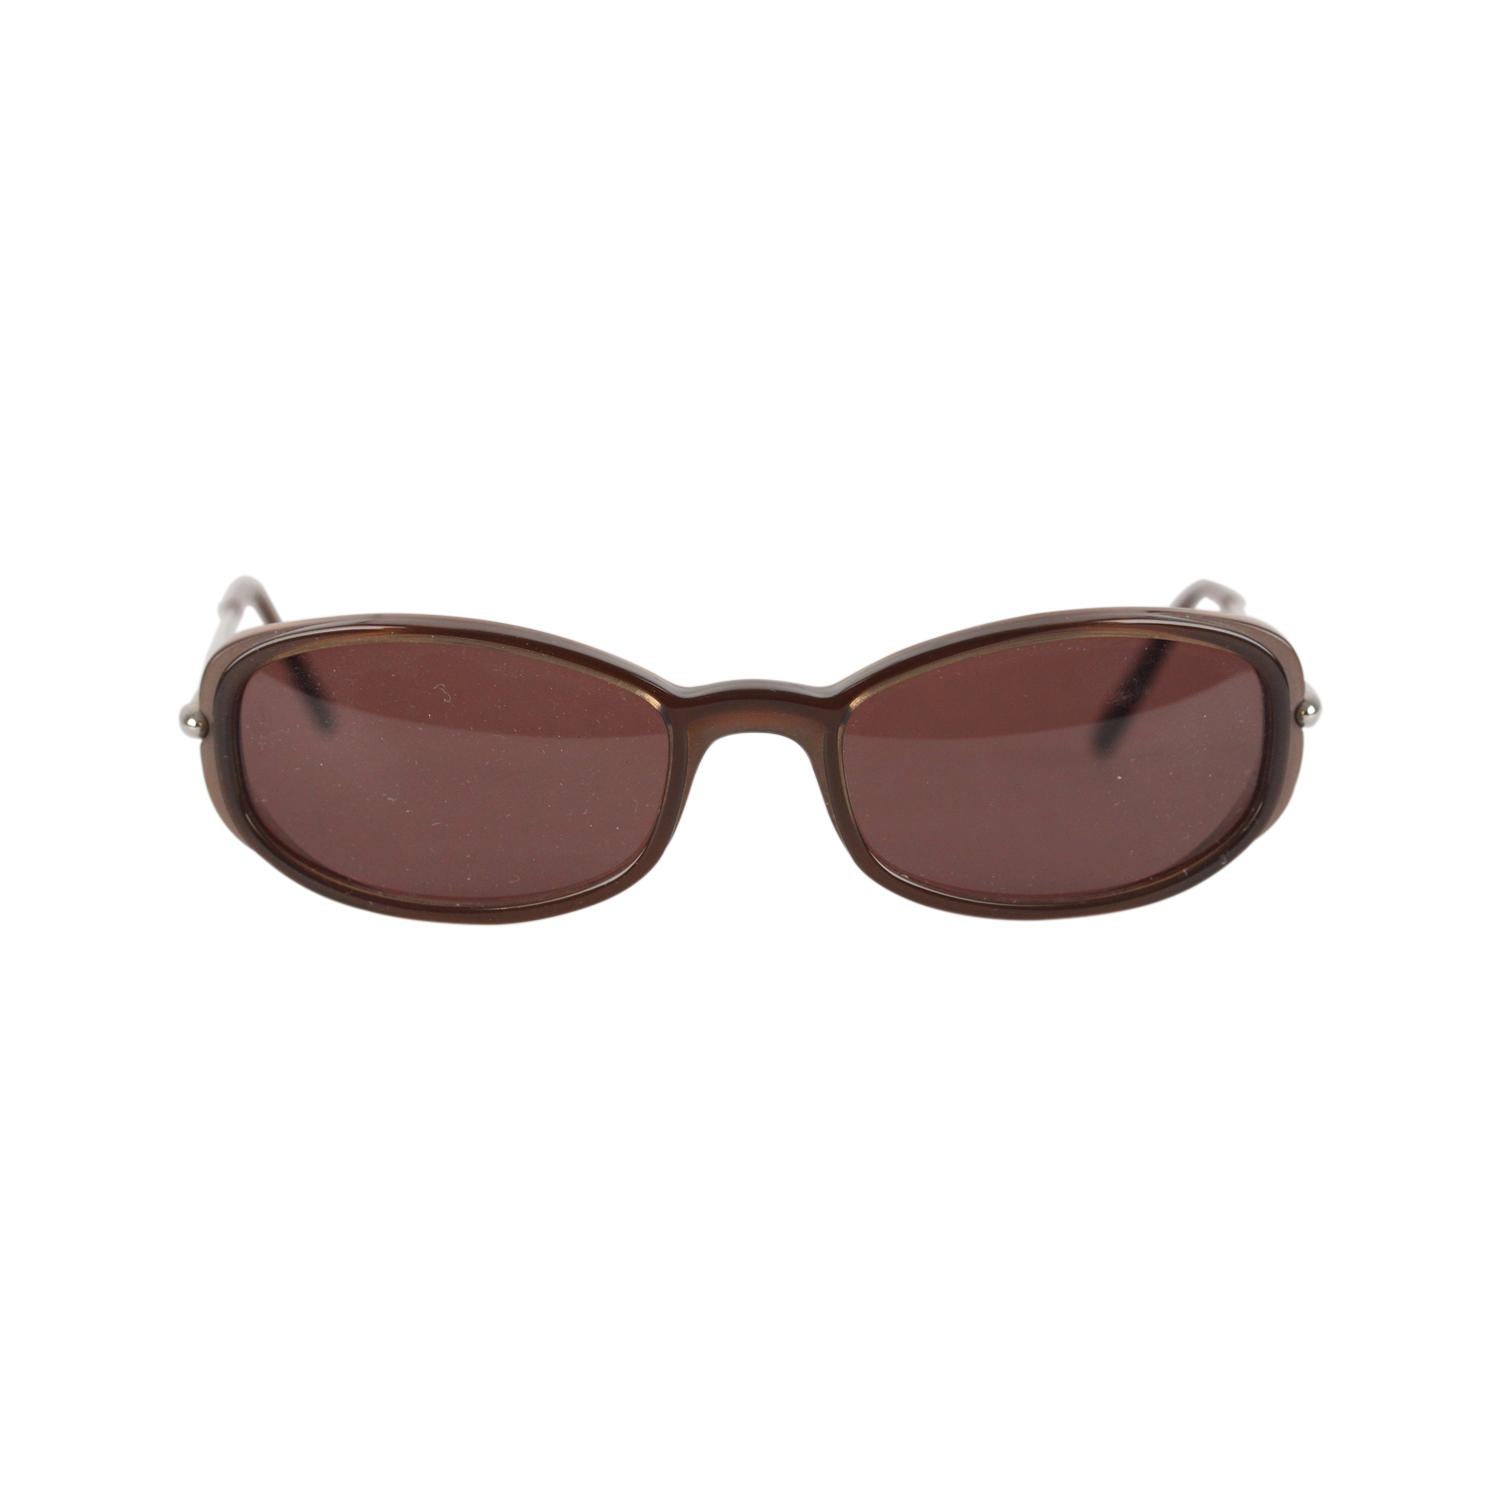 Cartier Paris Brown Unisex Sunglasses Mod T8200423 51mm New Old Stock 6